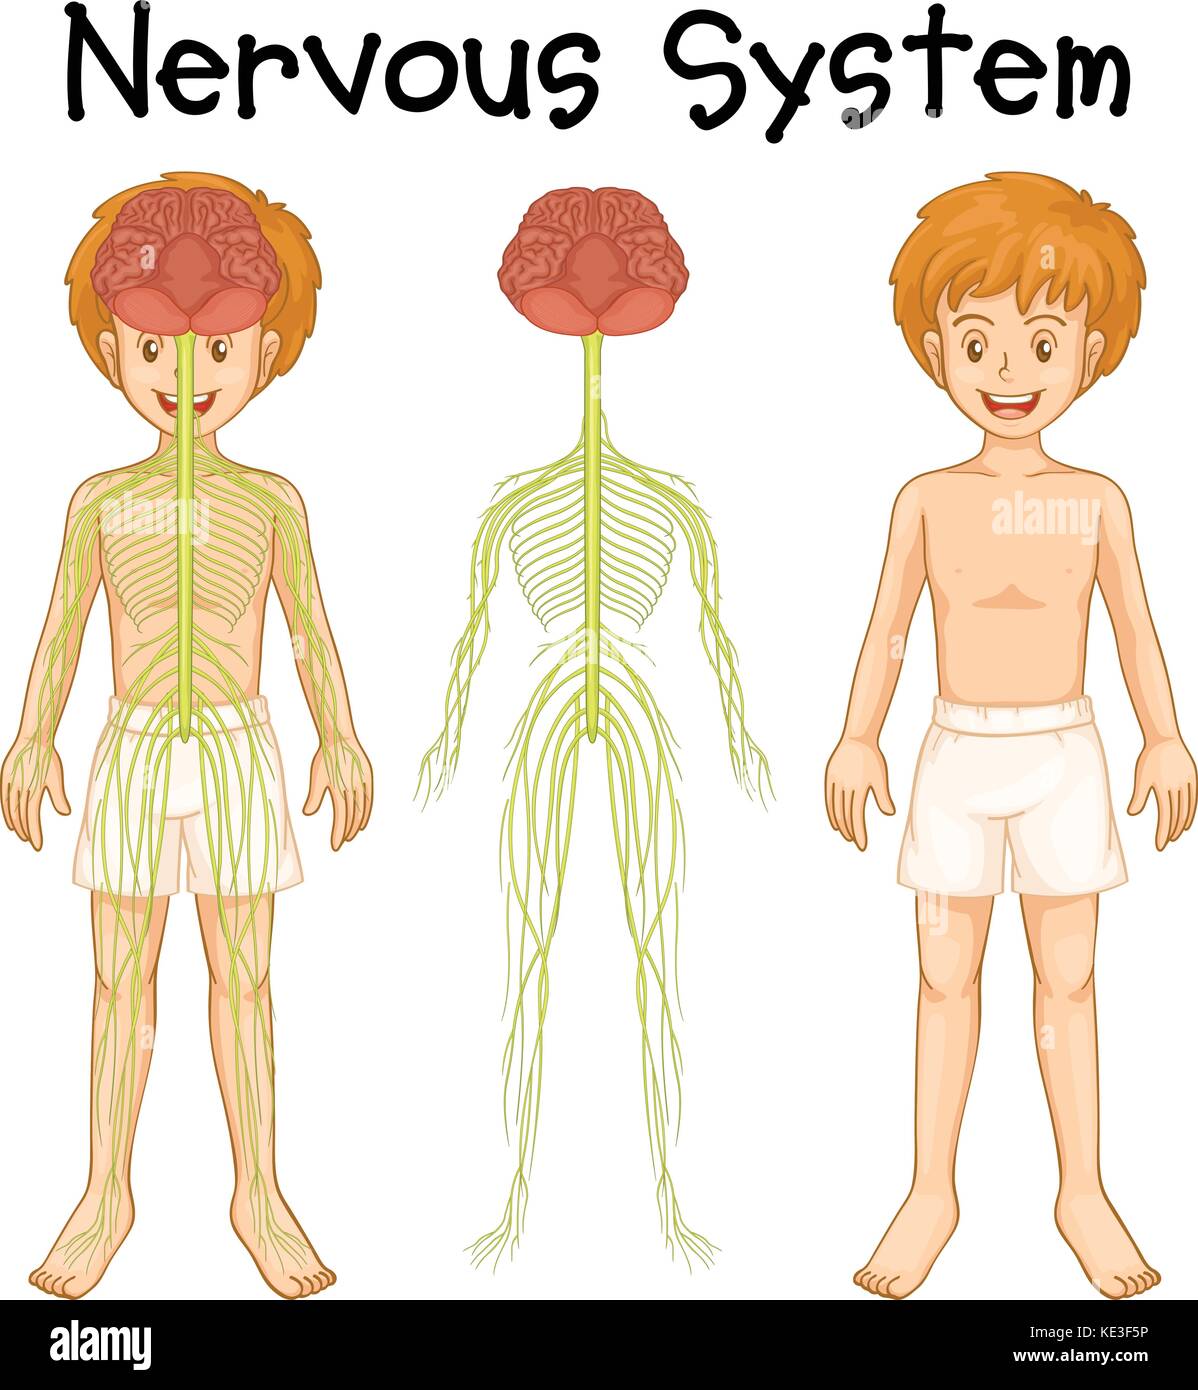 Nervous system of human boy illustration Stock Vector Image & Art - Alamy